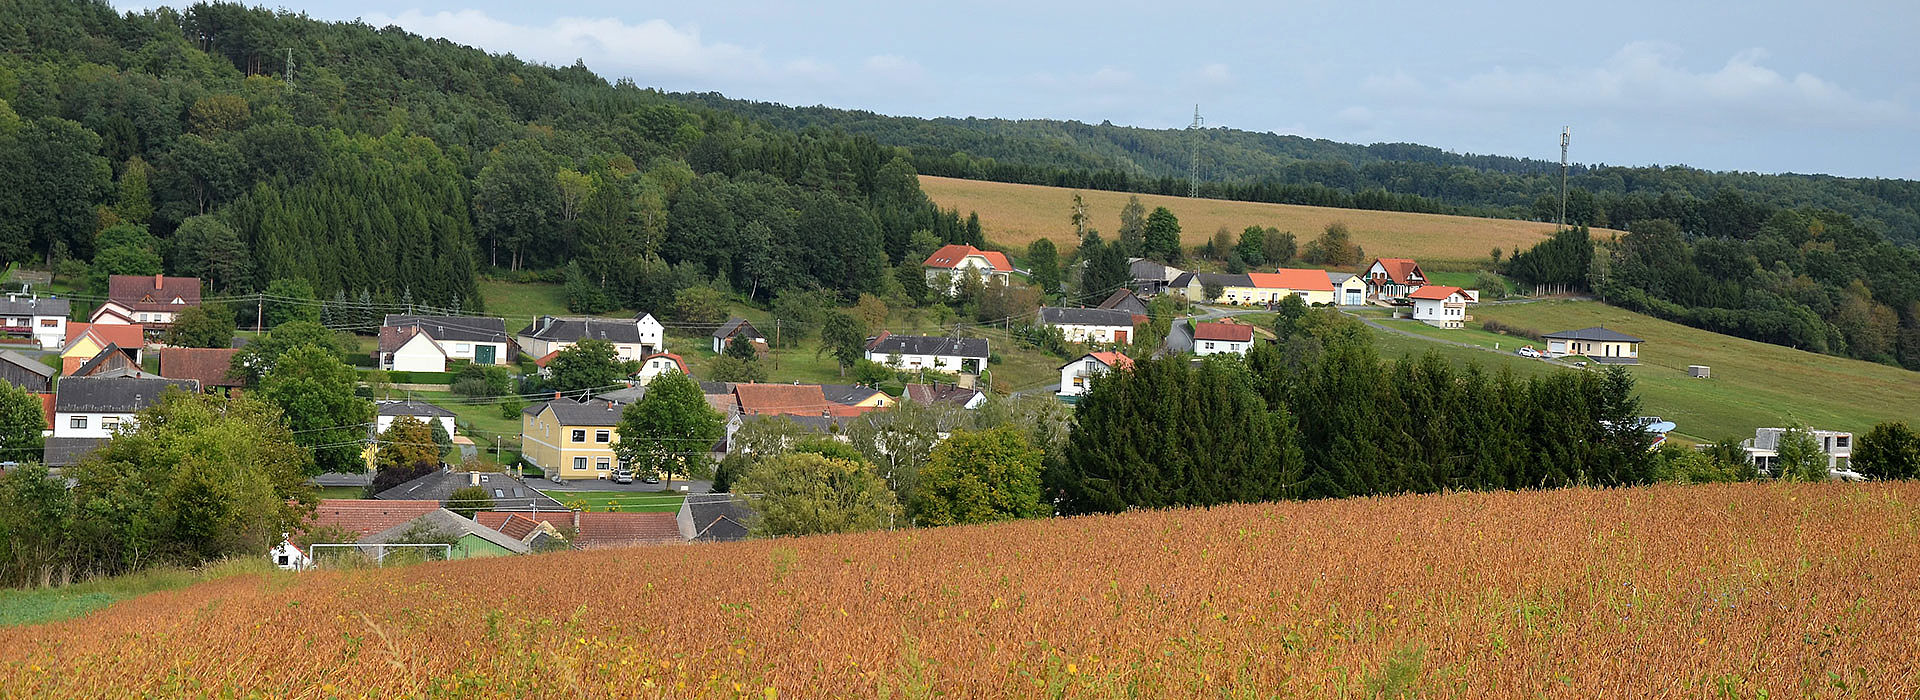 Gemeinde Heugraben